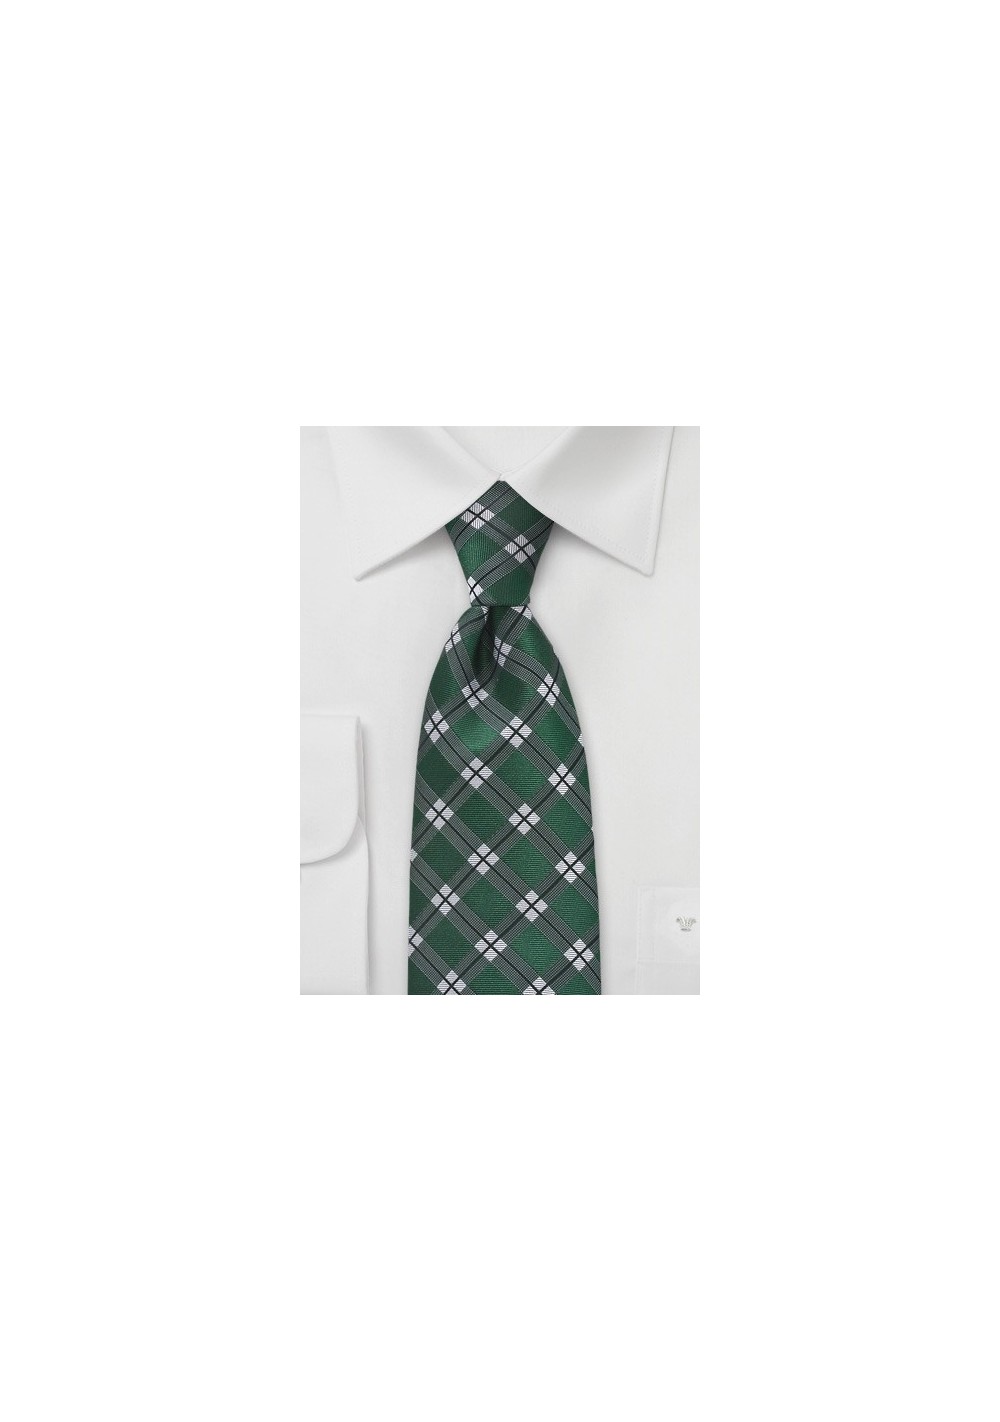 Sharp Plaid Tie in Hunter Green